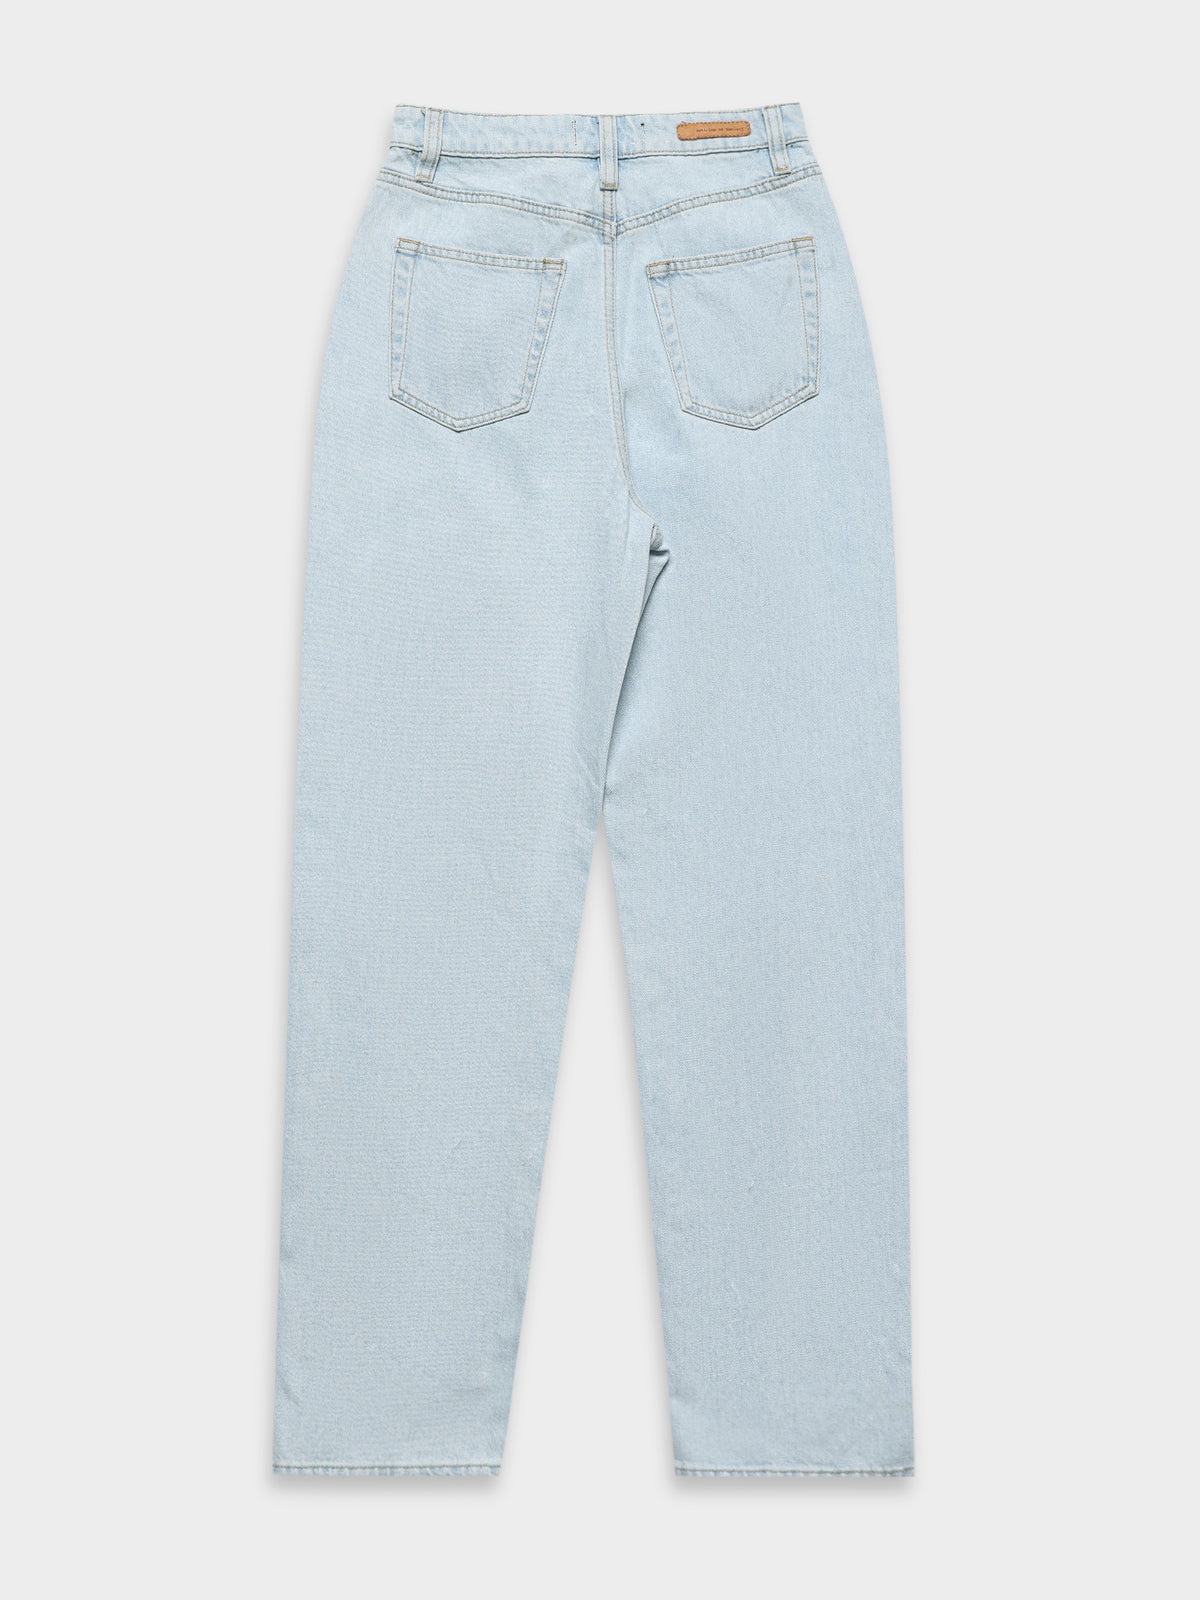 Hailey Baggy Split Jeans in Vintage Blue